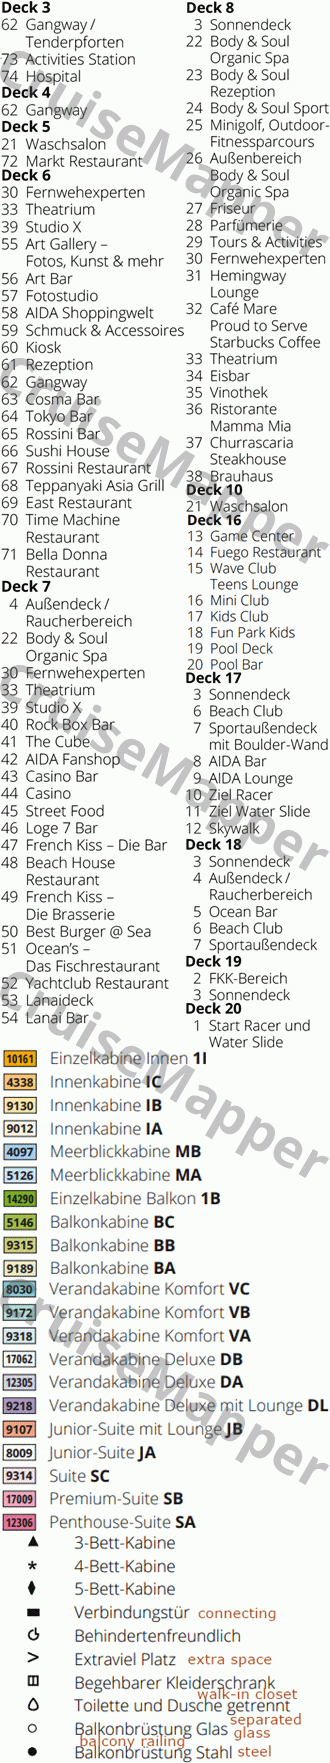 AIDAcosma deck 6 plan (Lobby-Shops-Restaurants) legend